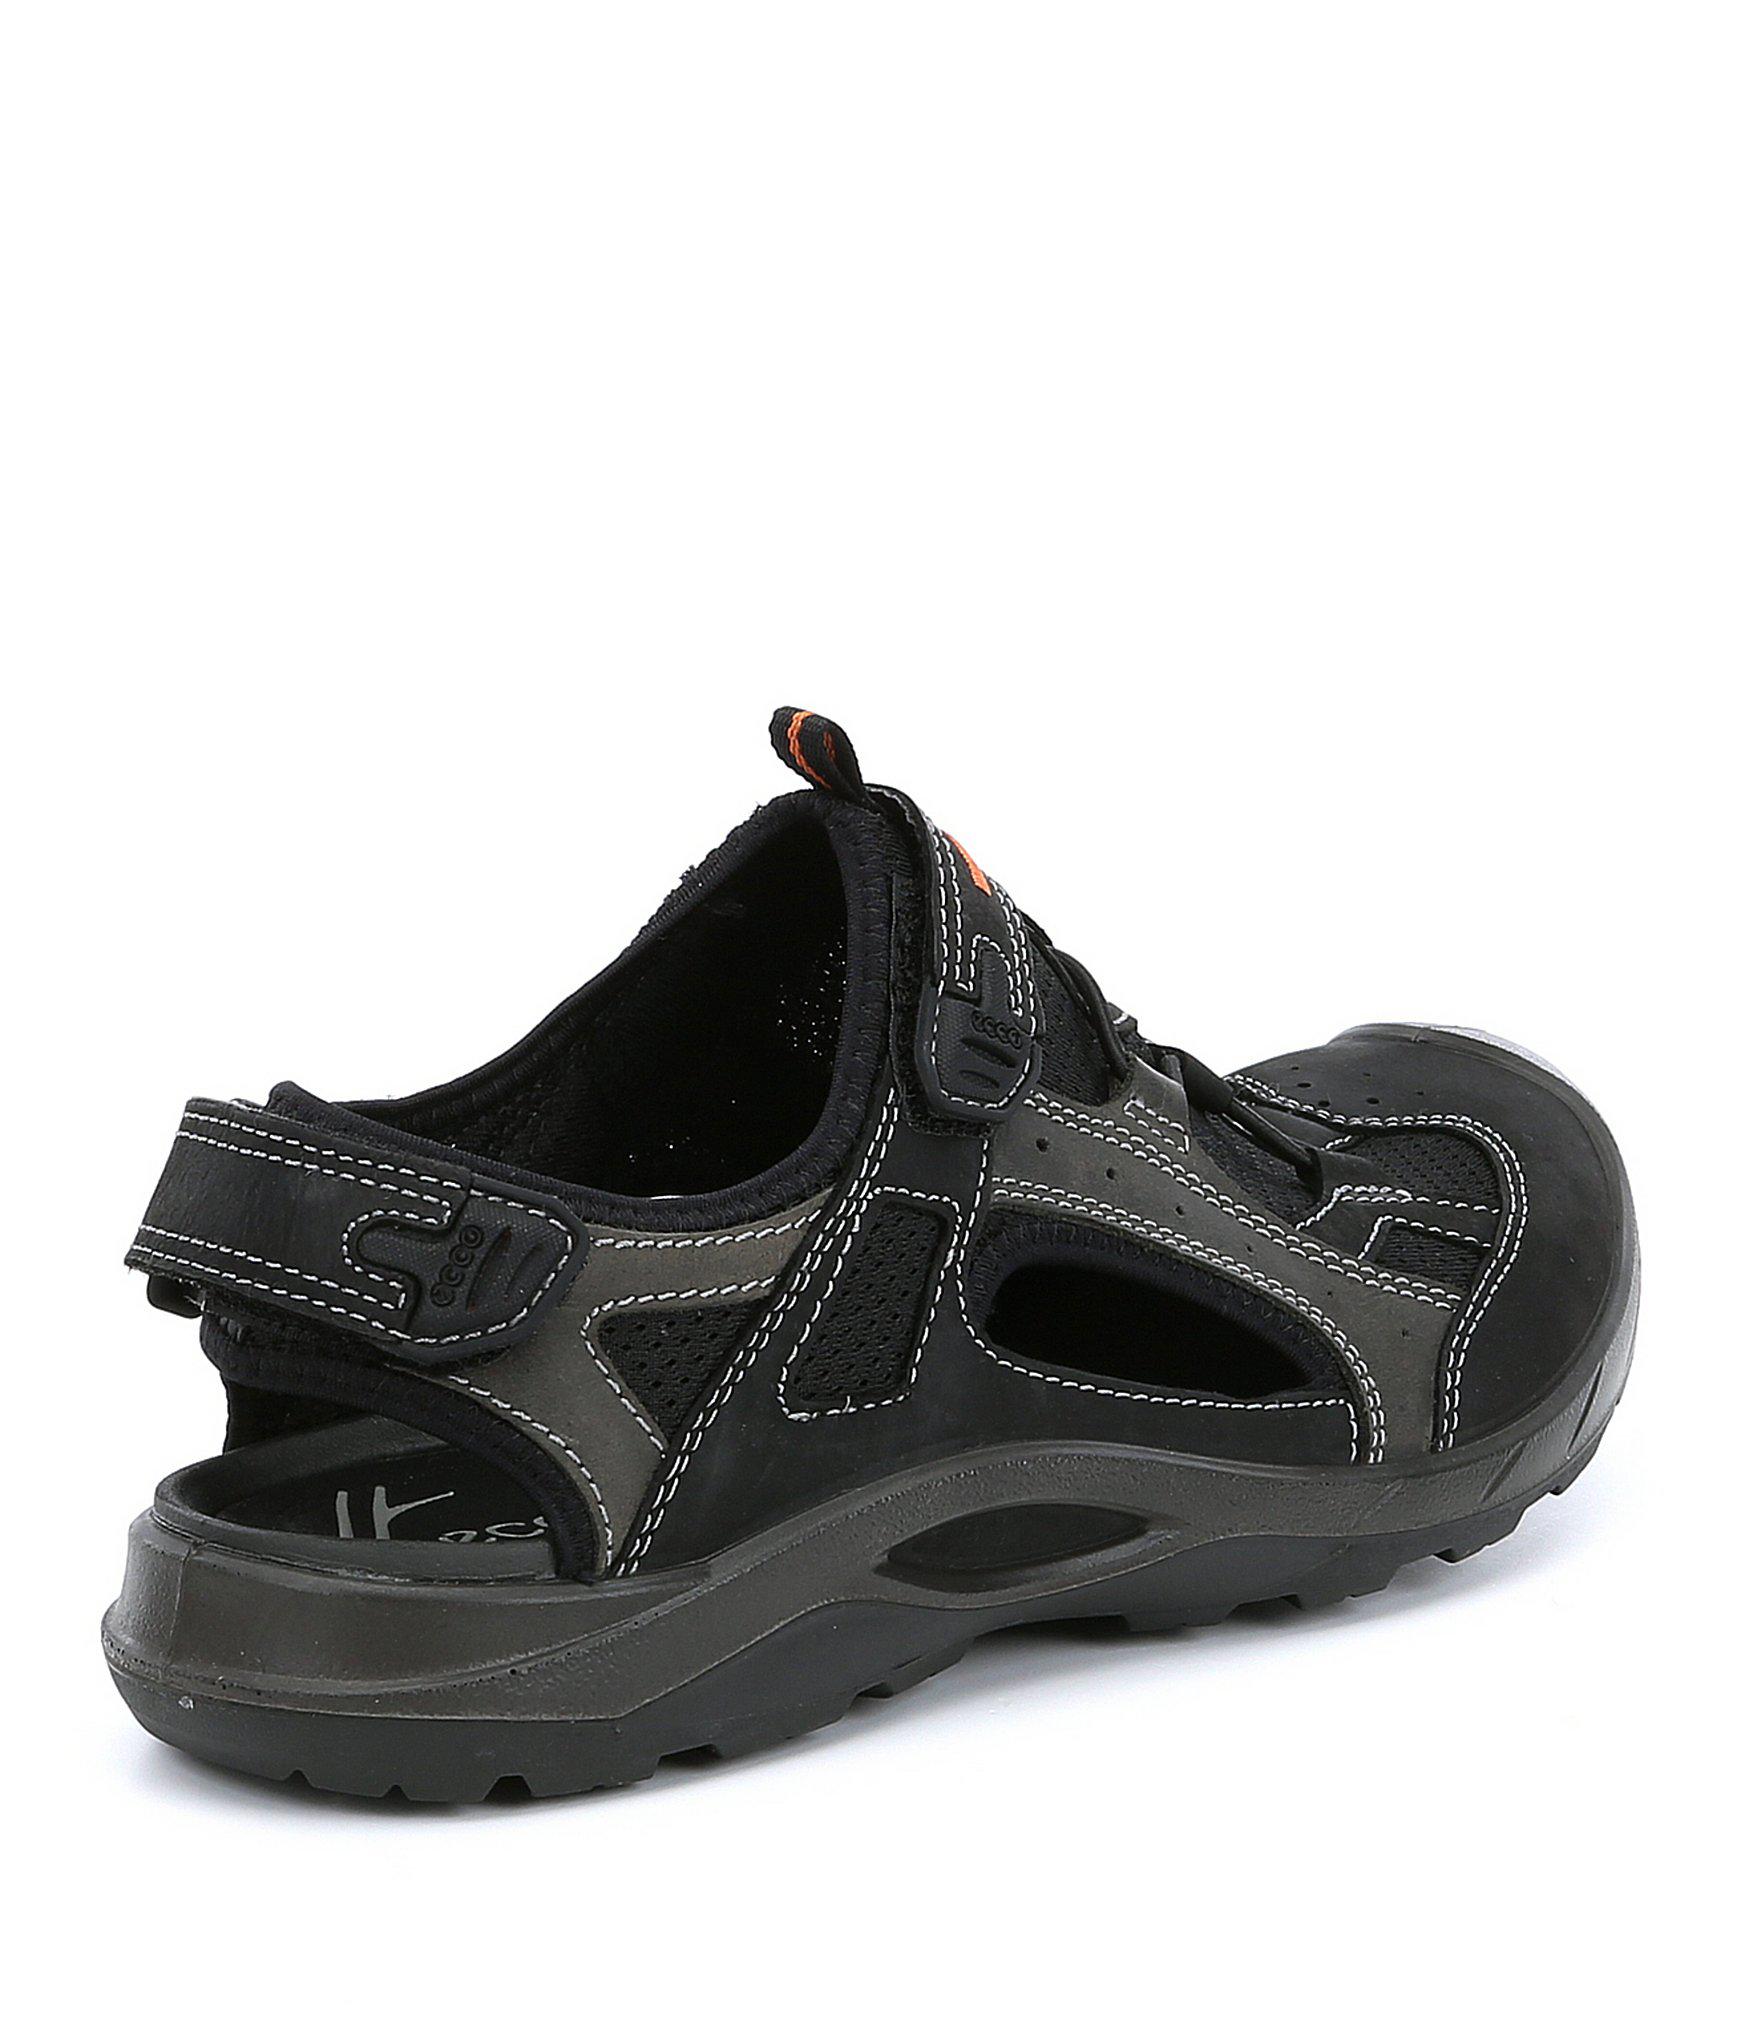 Ecco Synthetic Men's Biom Delta Fisherman Sandals in Black for Men - Lyst